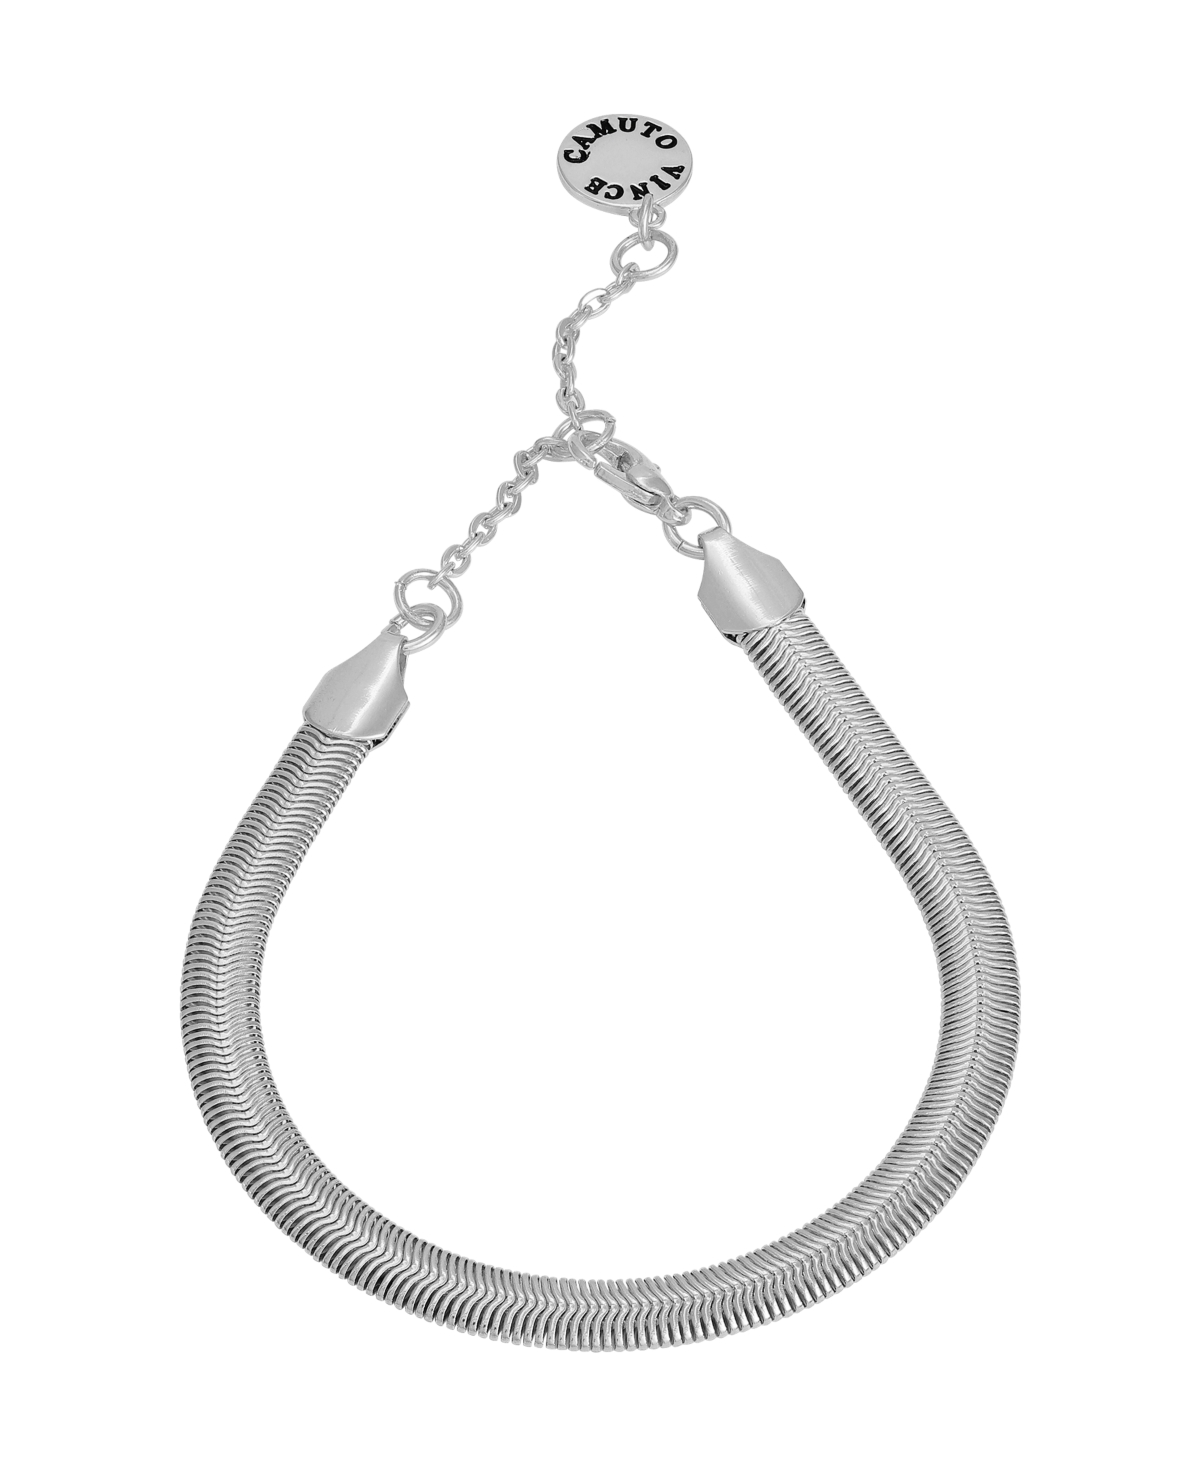 Vince Camuto Silver-tone Snake Chain Bracelet, 7.5" + 2" Extender